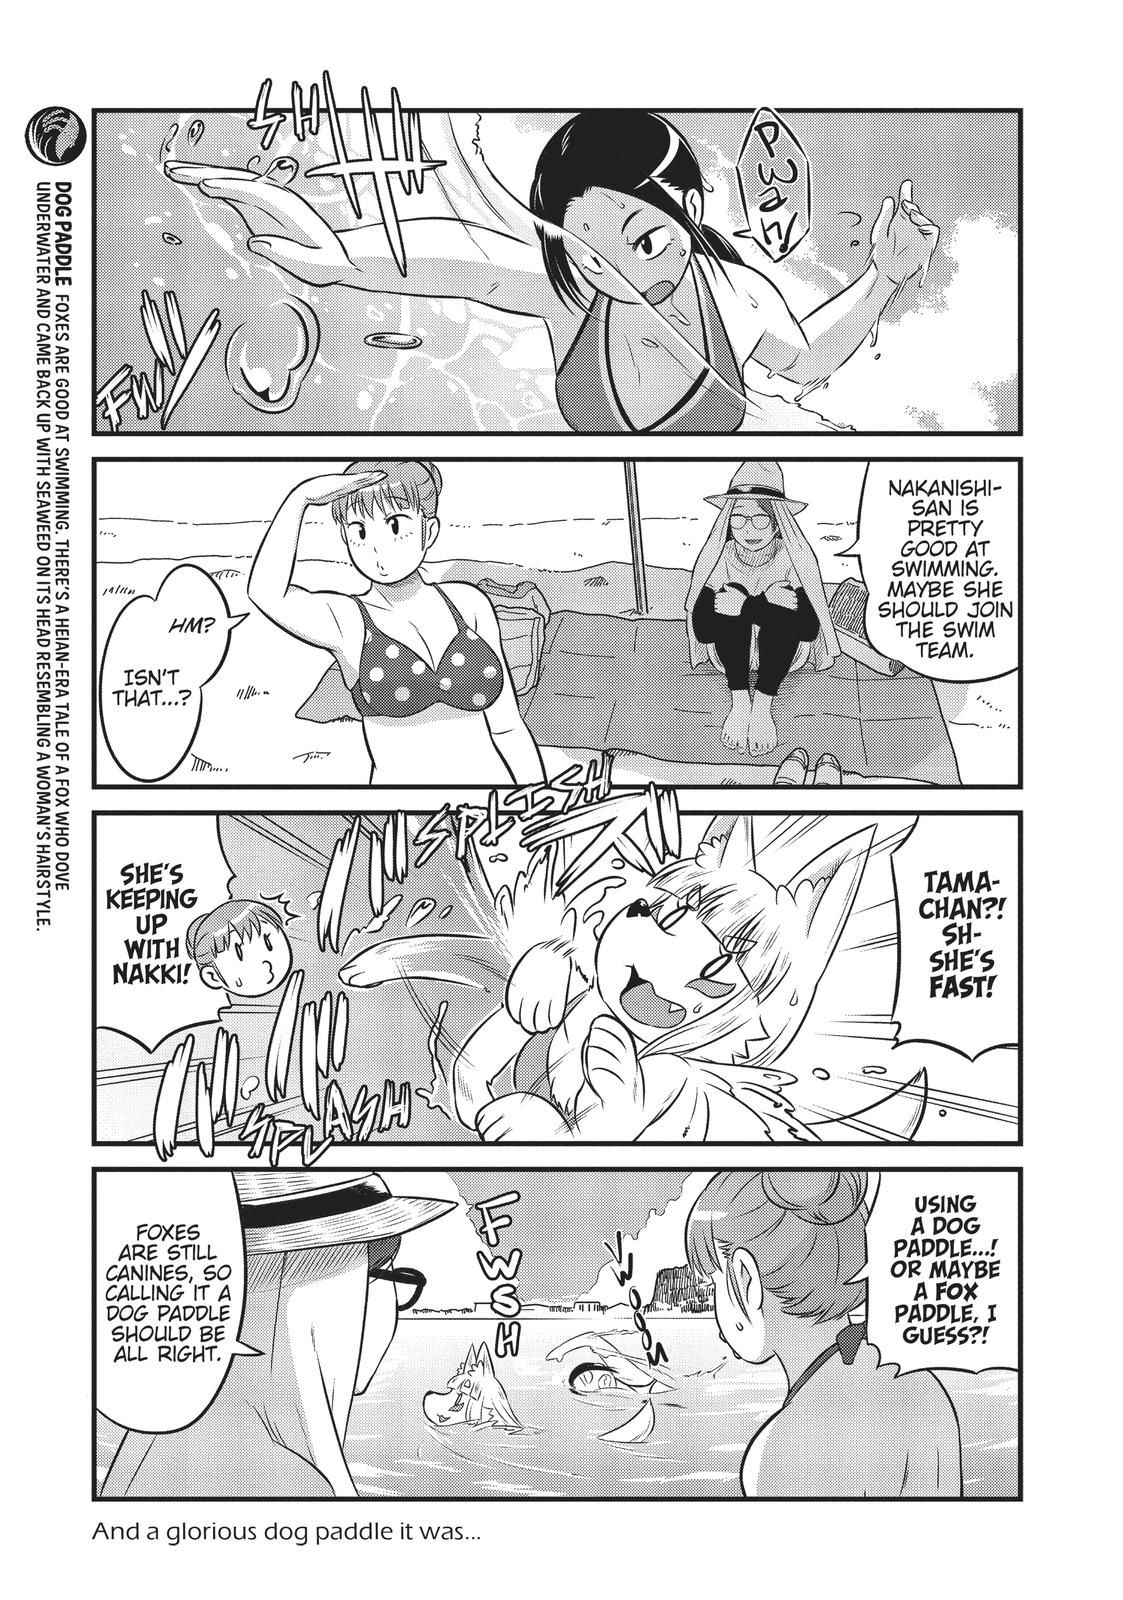 Tamamo-chan's a Fox! - chapter 14 - #5